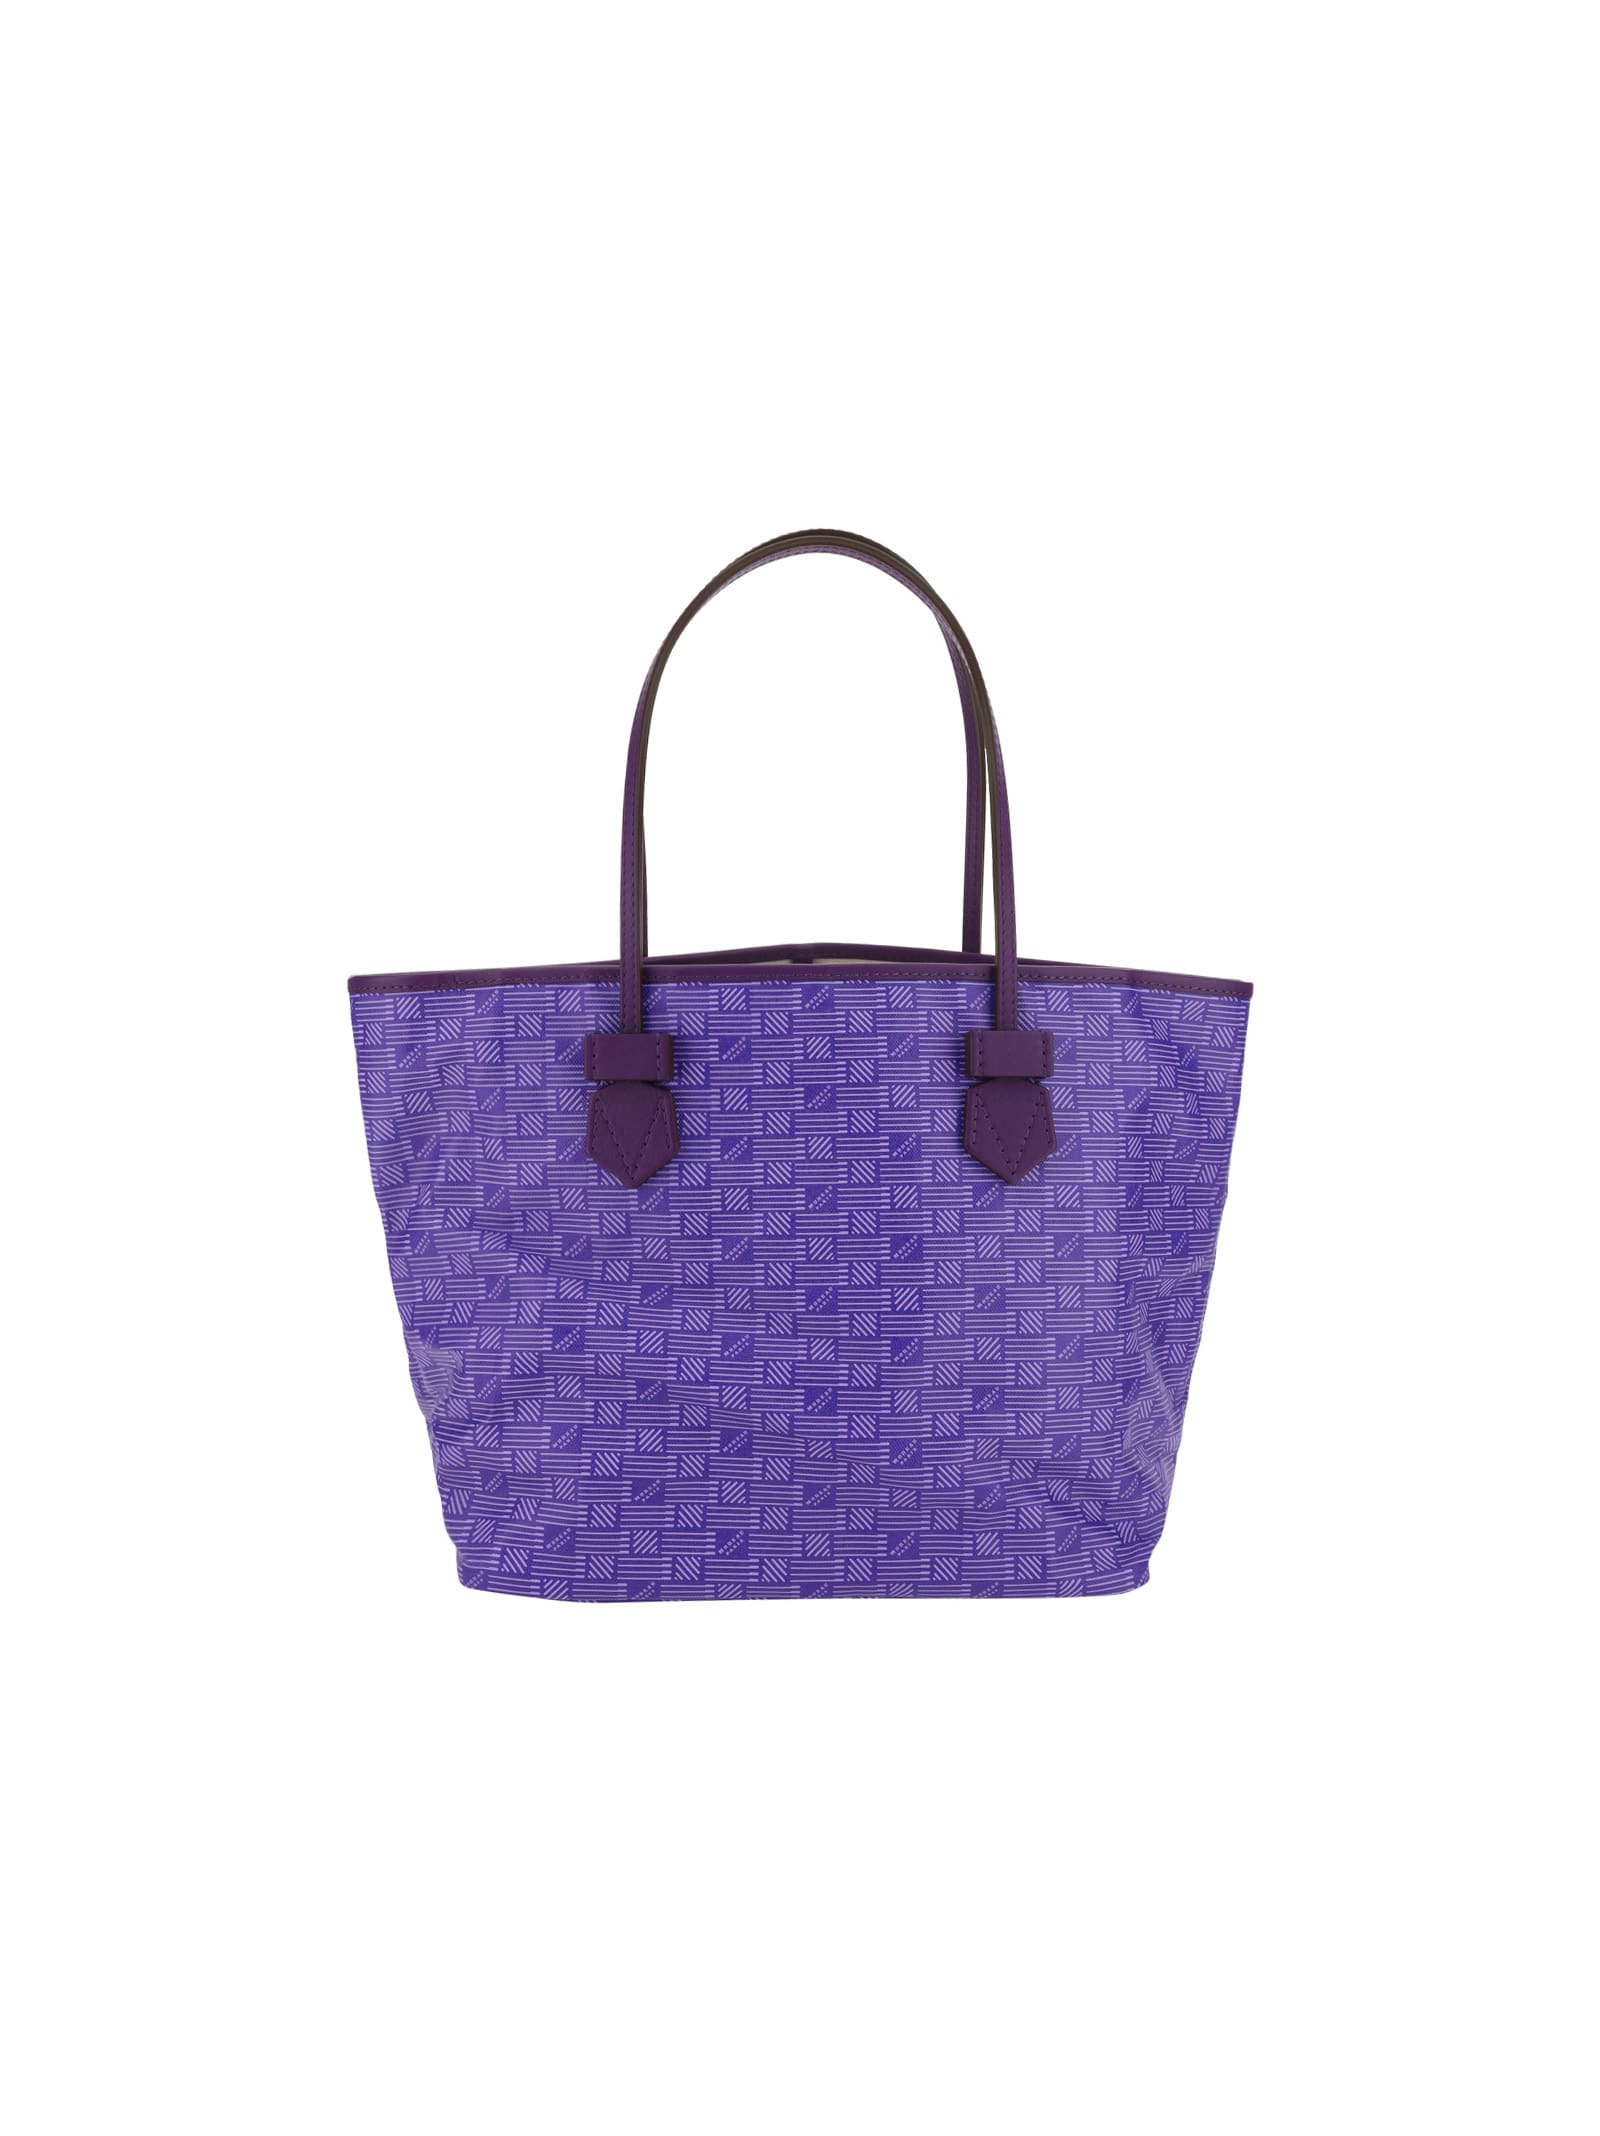 Moreau Paris St. Tropez Tote Bag In Purple/milk